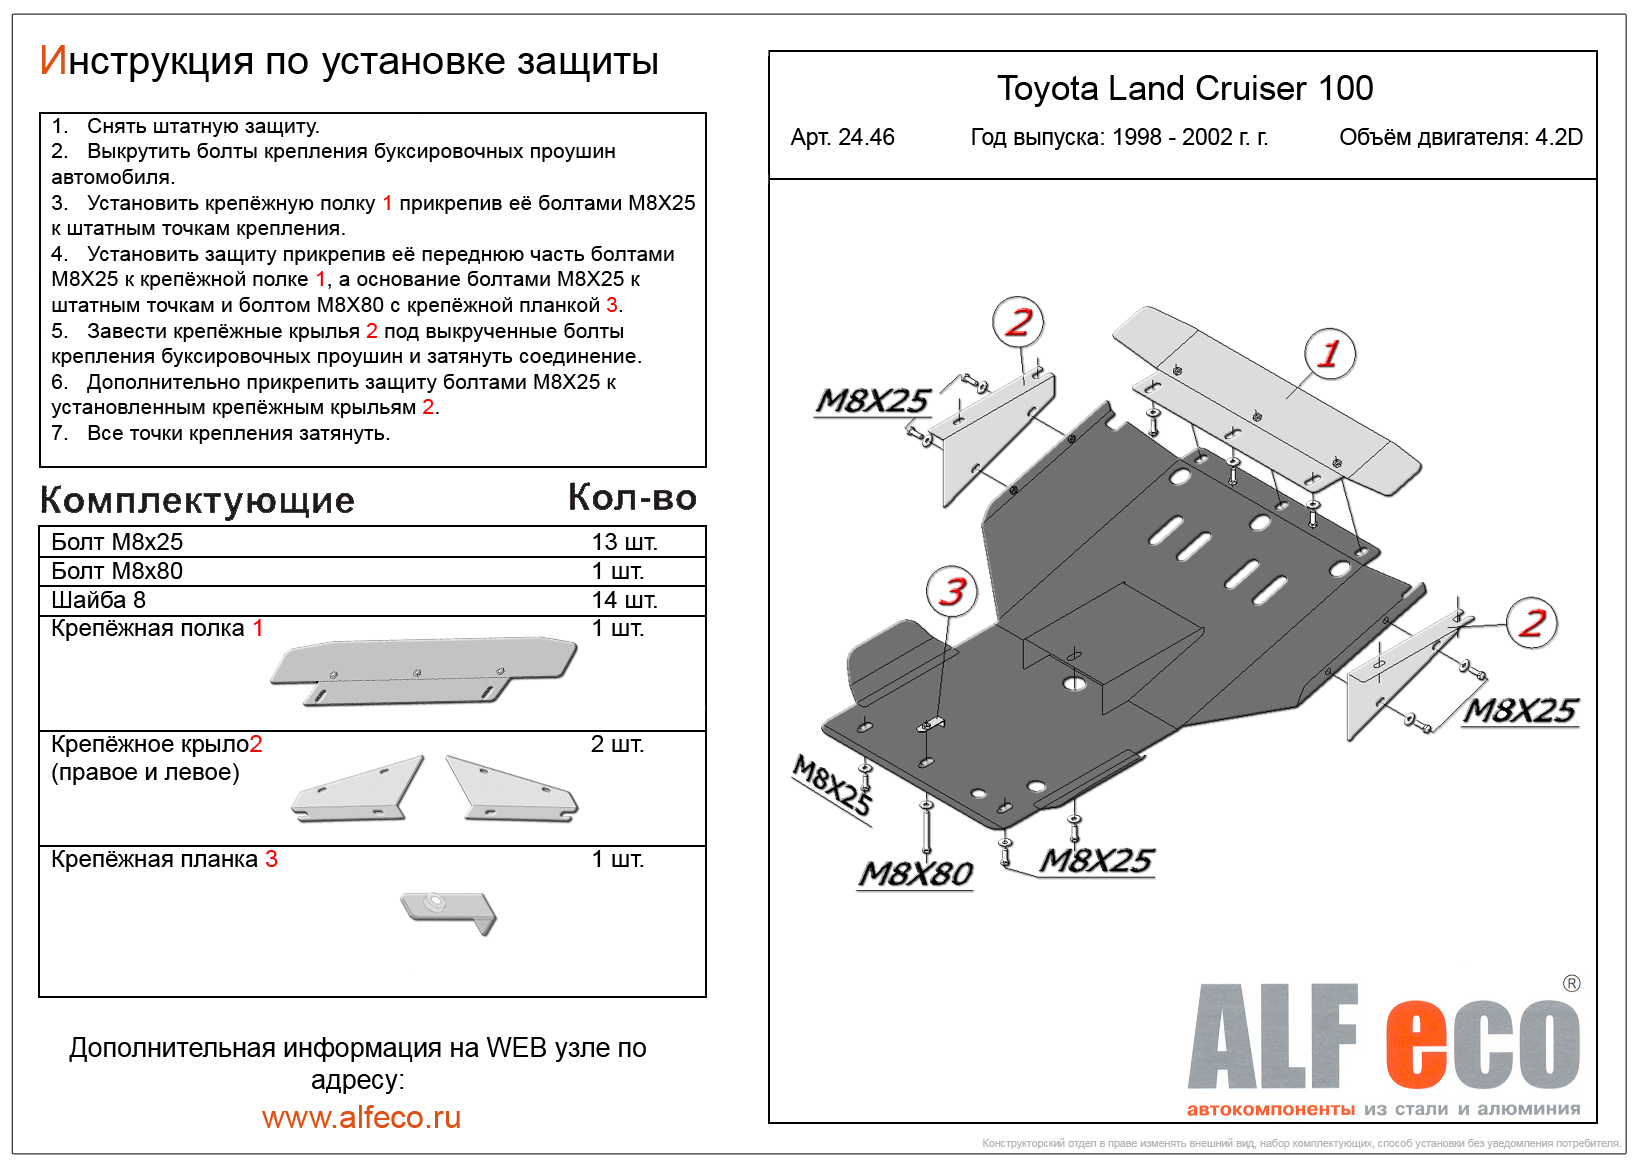 ,    Toyota Land Cruiser  100 1998 - 2002
                